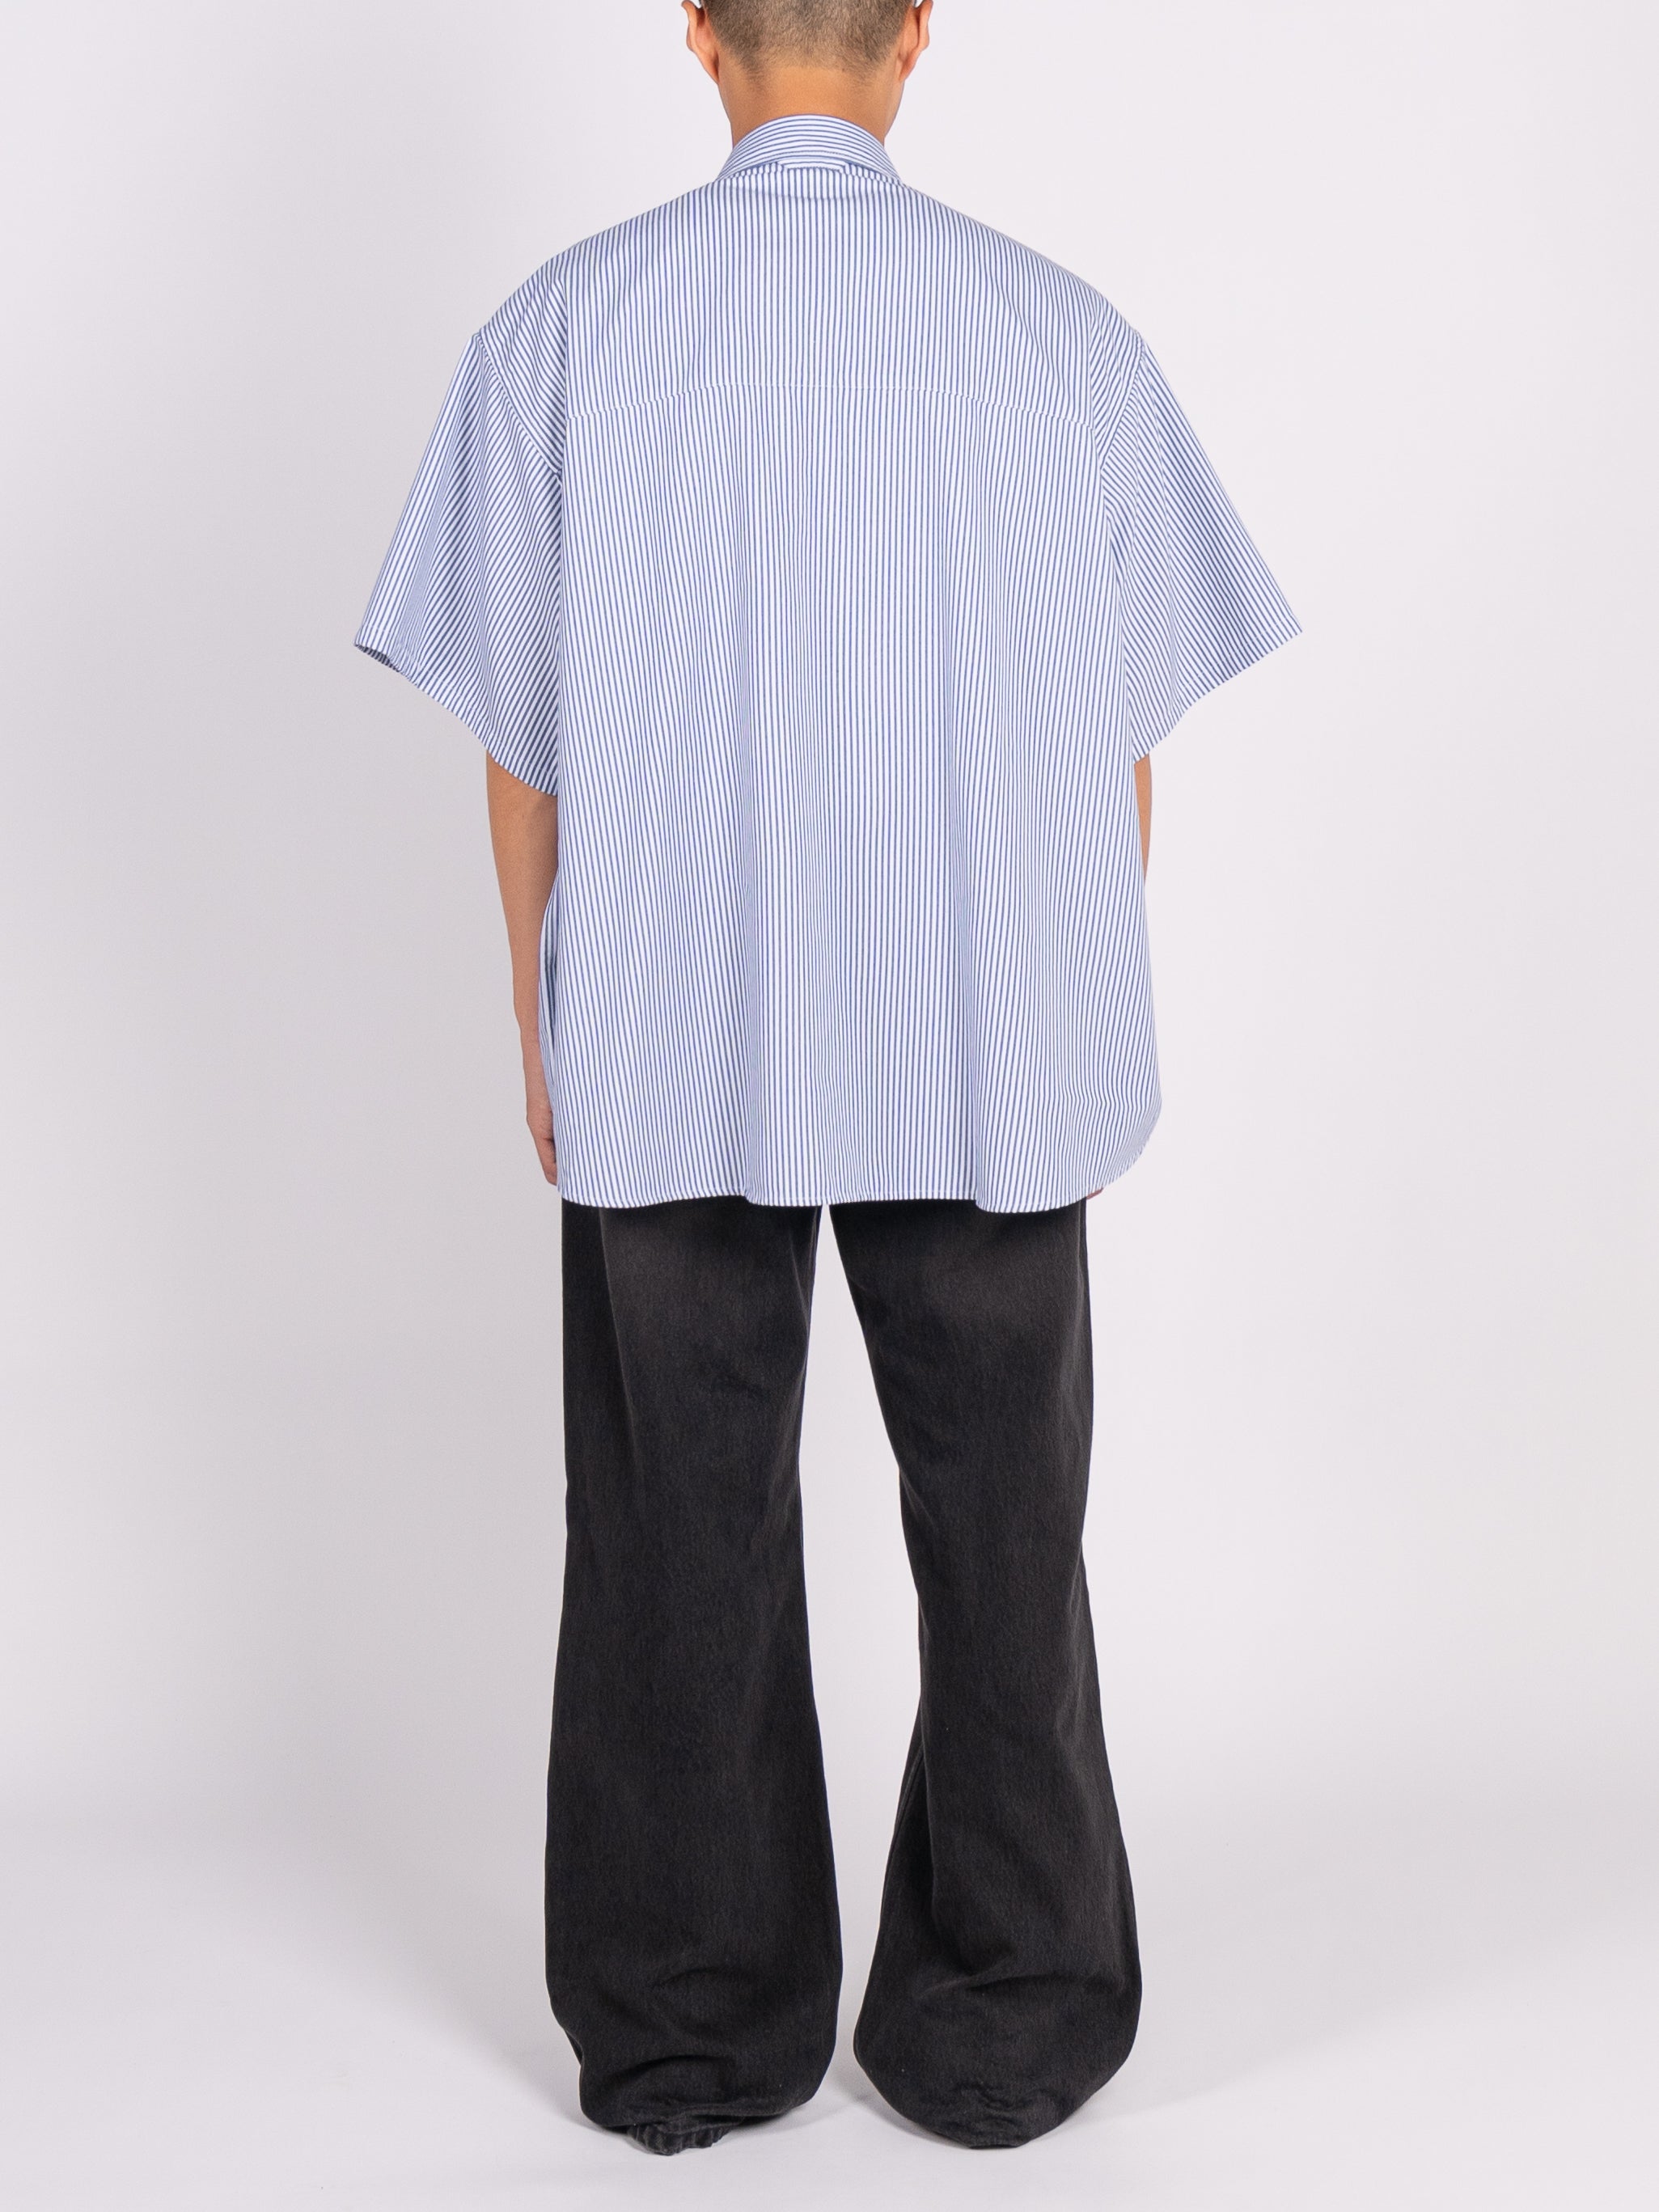 FreshService Dry Oxford Flap Pocket S/S Shirt (Blue Stripe)